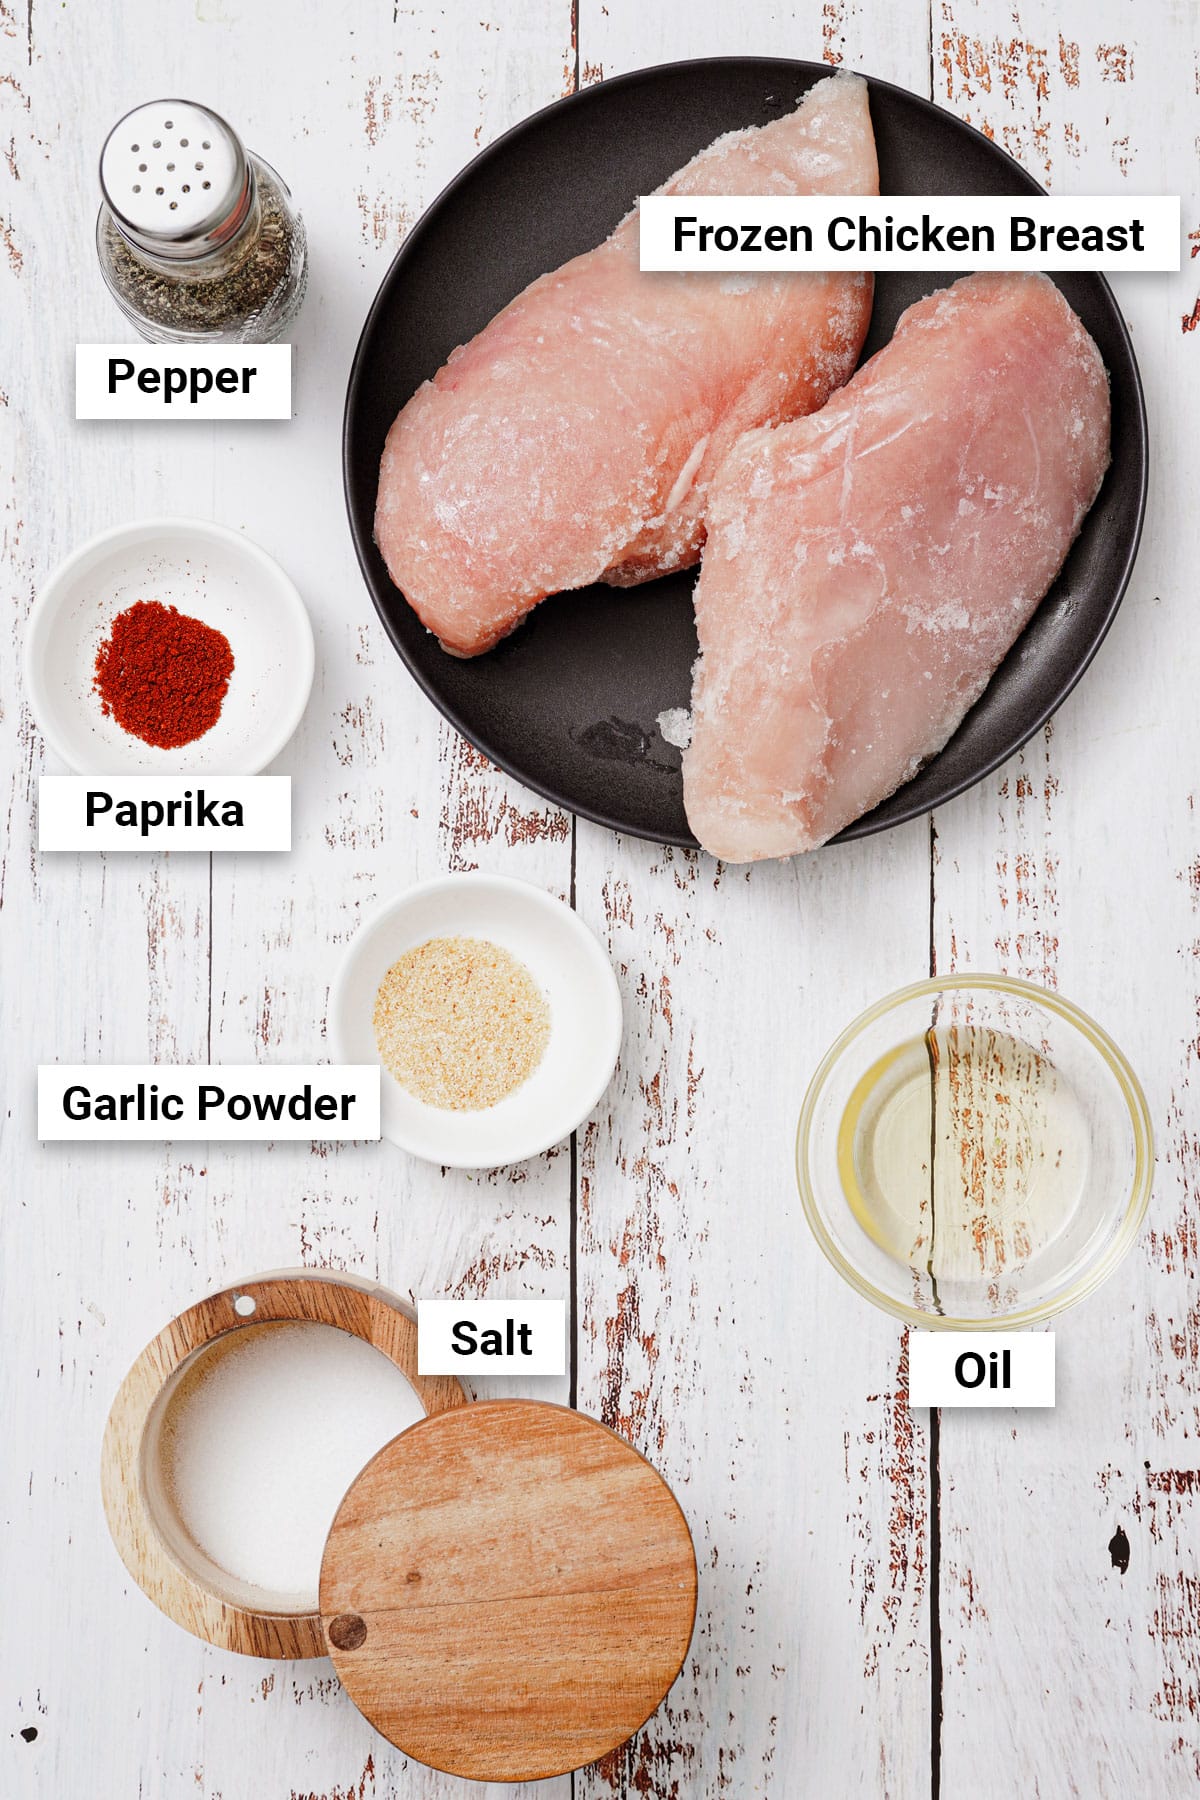 Ingredients for air fryer roasted frozen chicken breast recipe